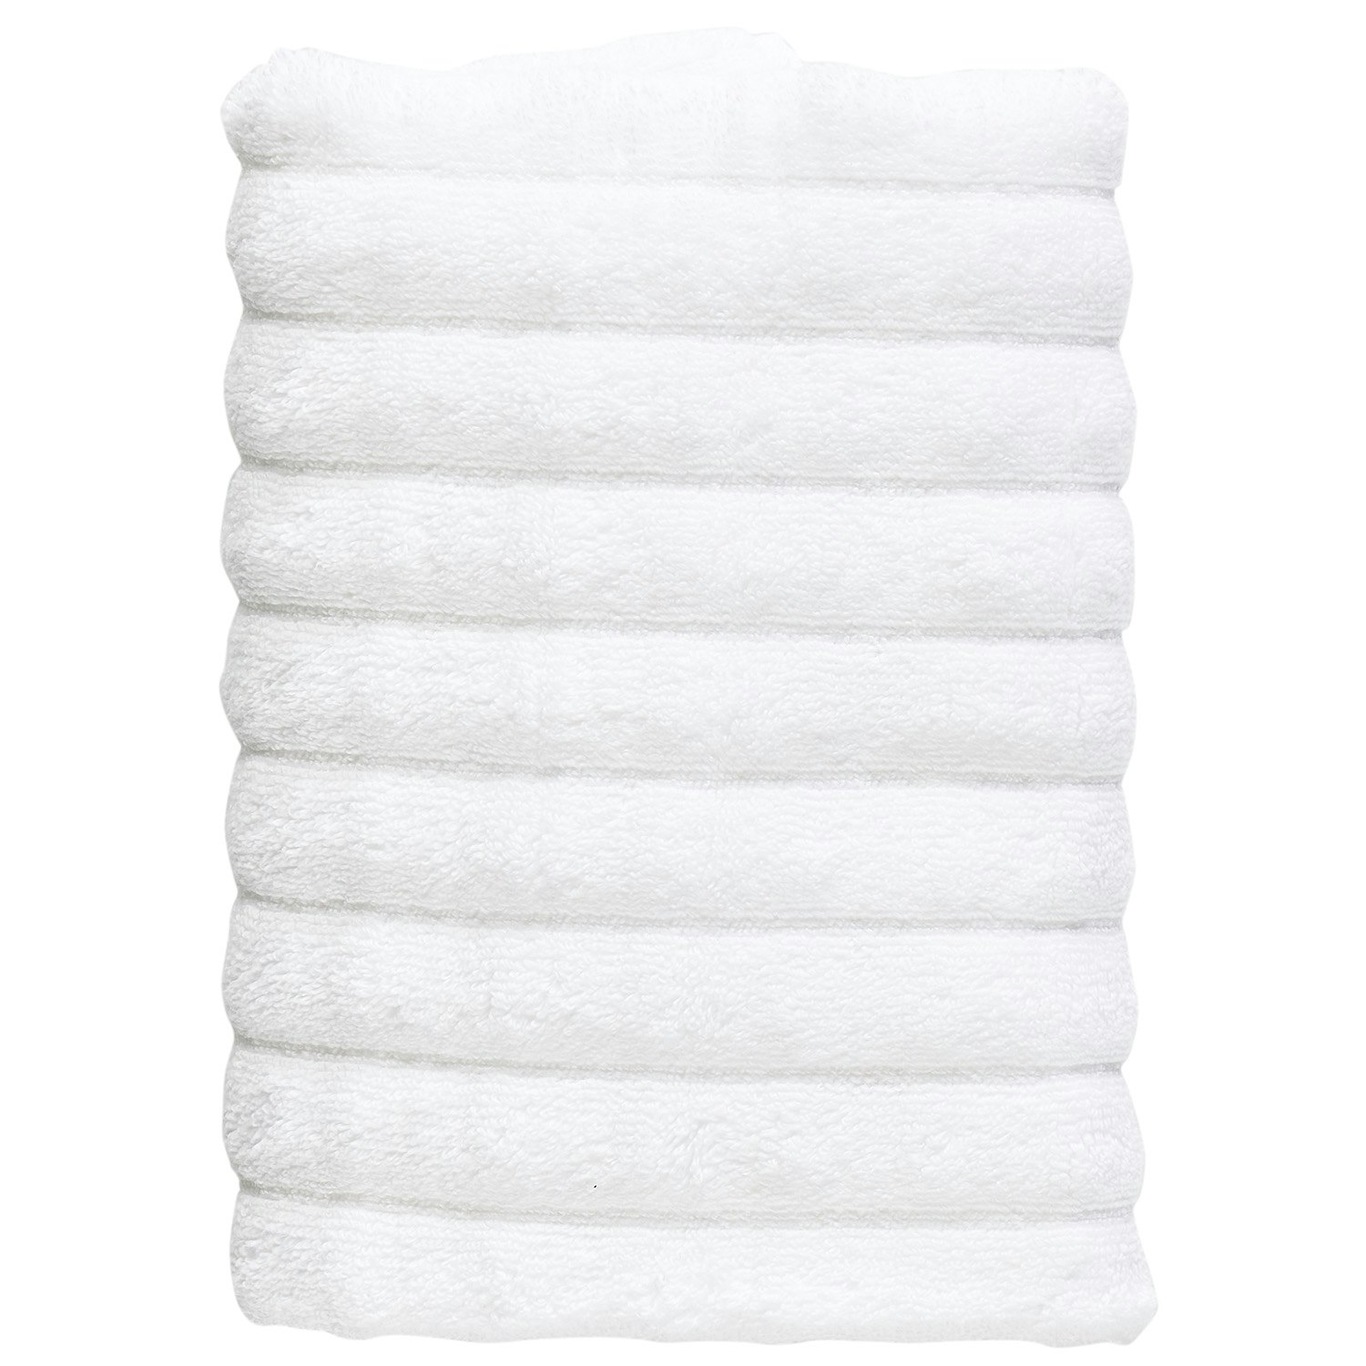 Inu Towel 50x100 cm, White